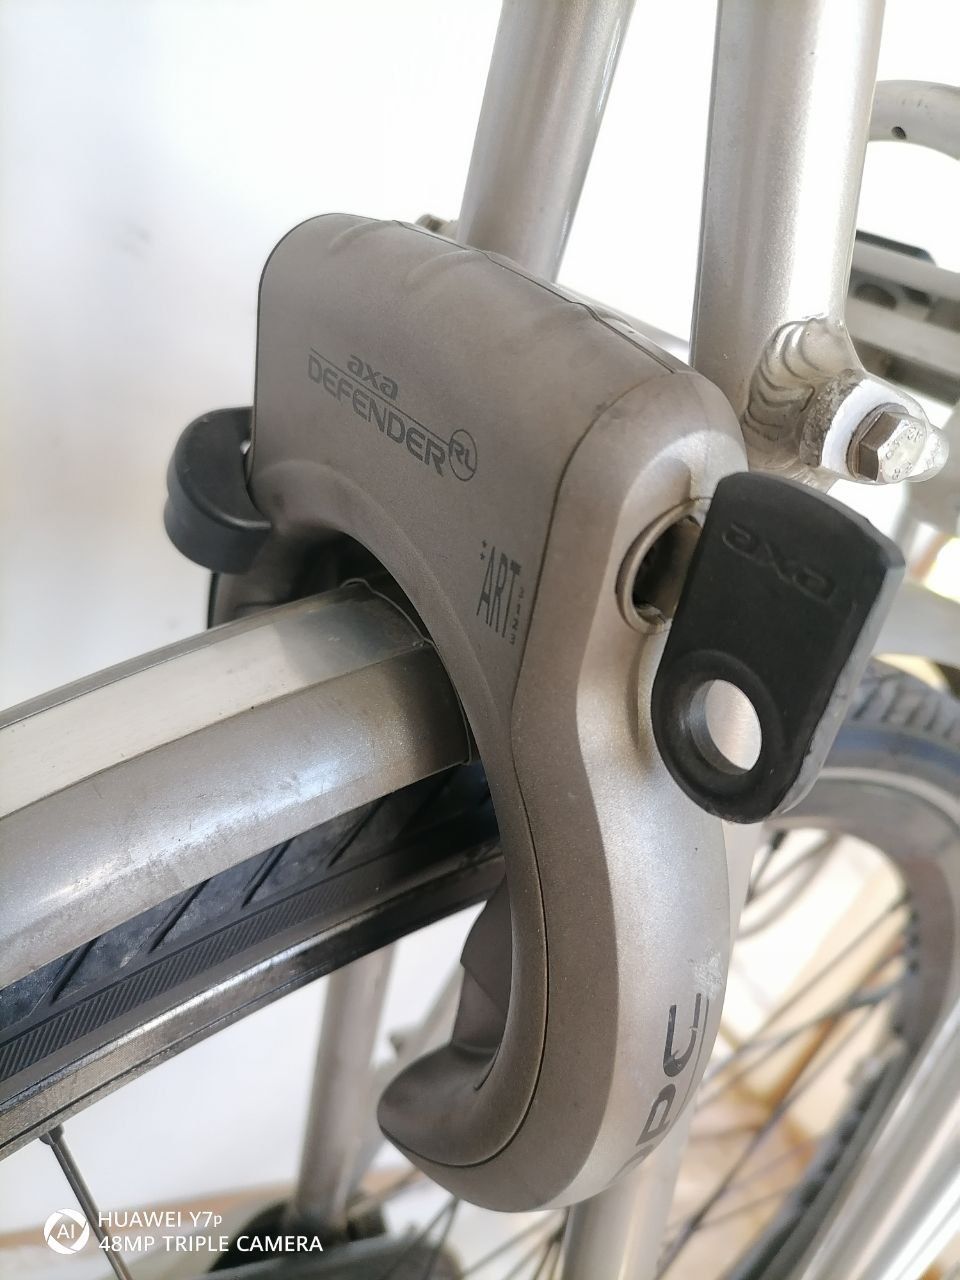 Голландский велосипед Batavus stacato
Холати аъло алюминий рама размер